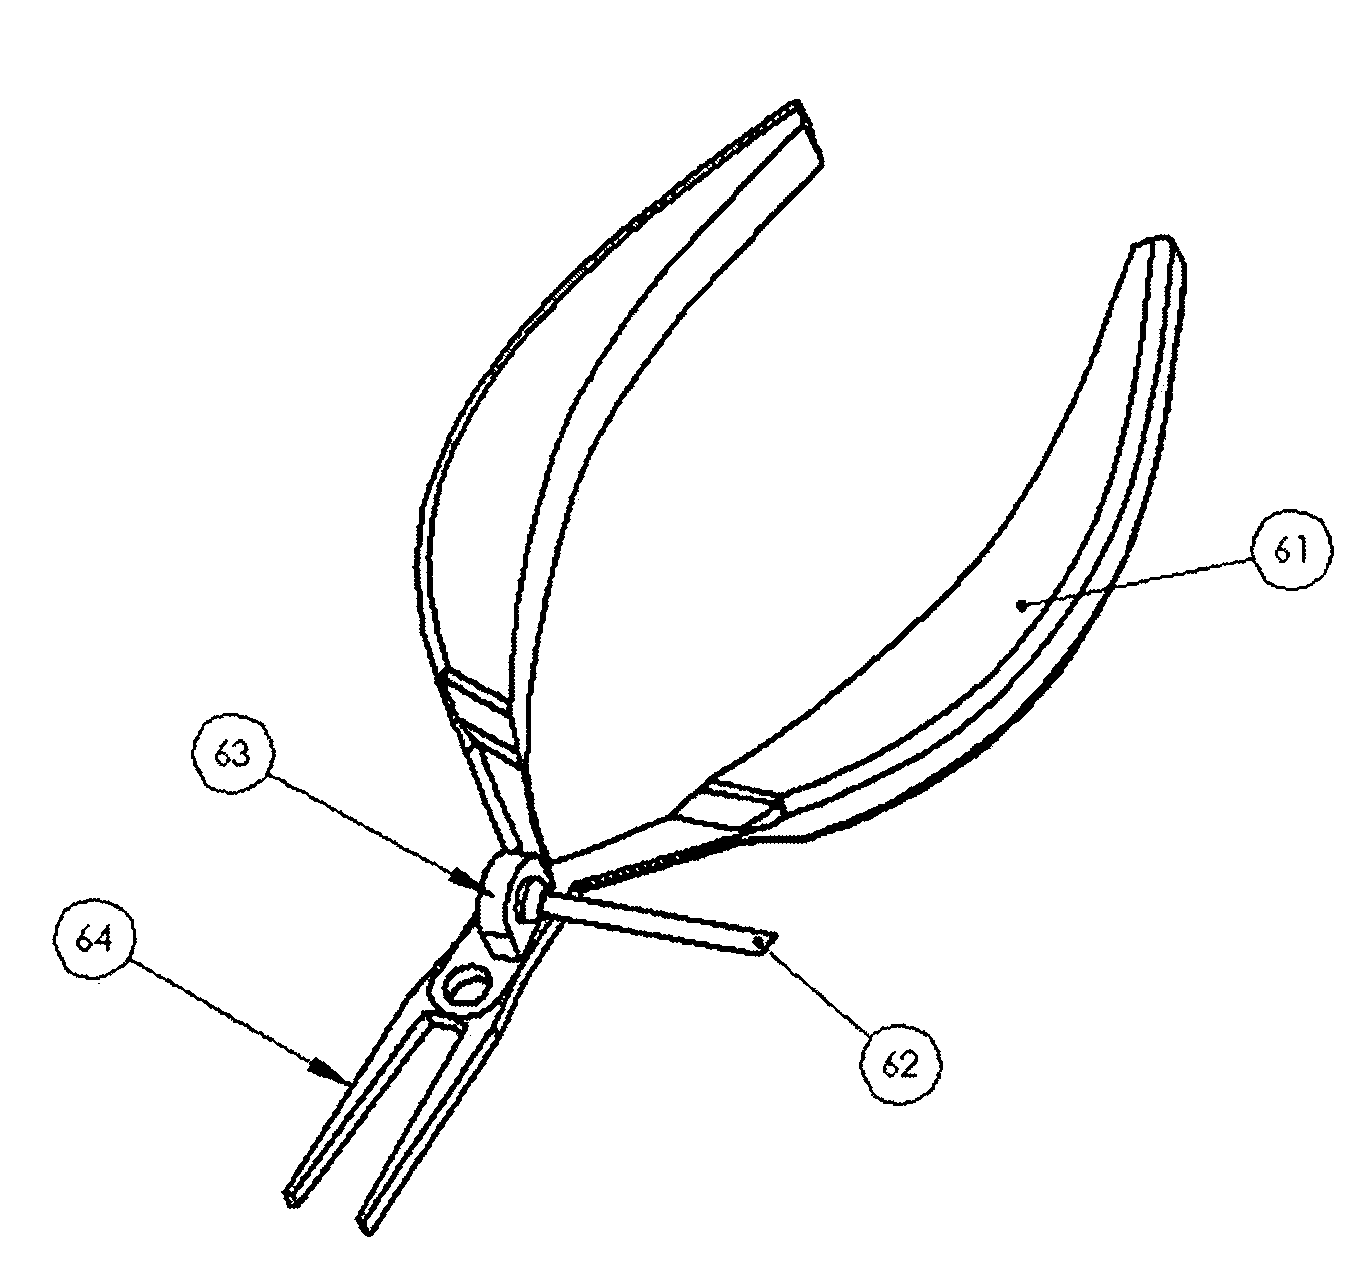 Apparatus and procedure for fish pin boning